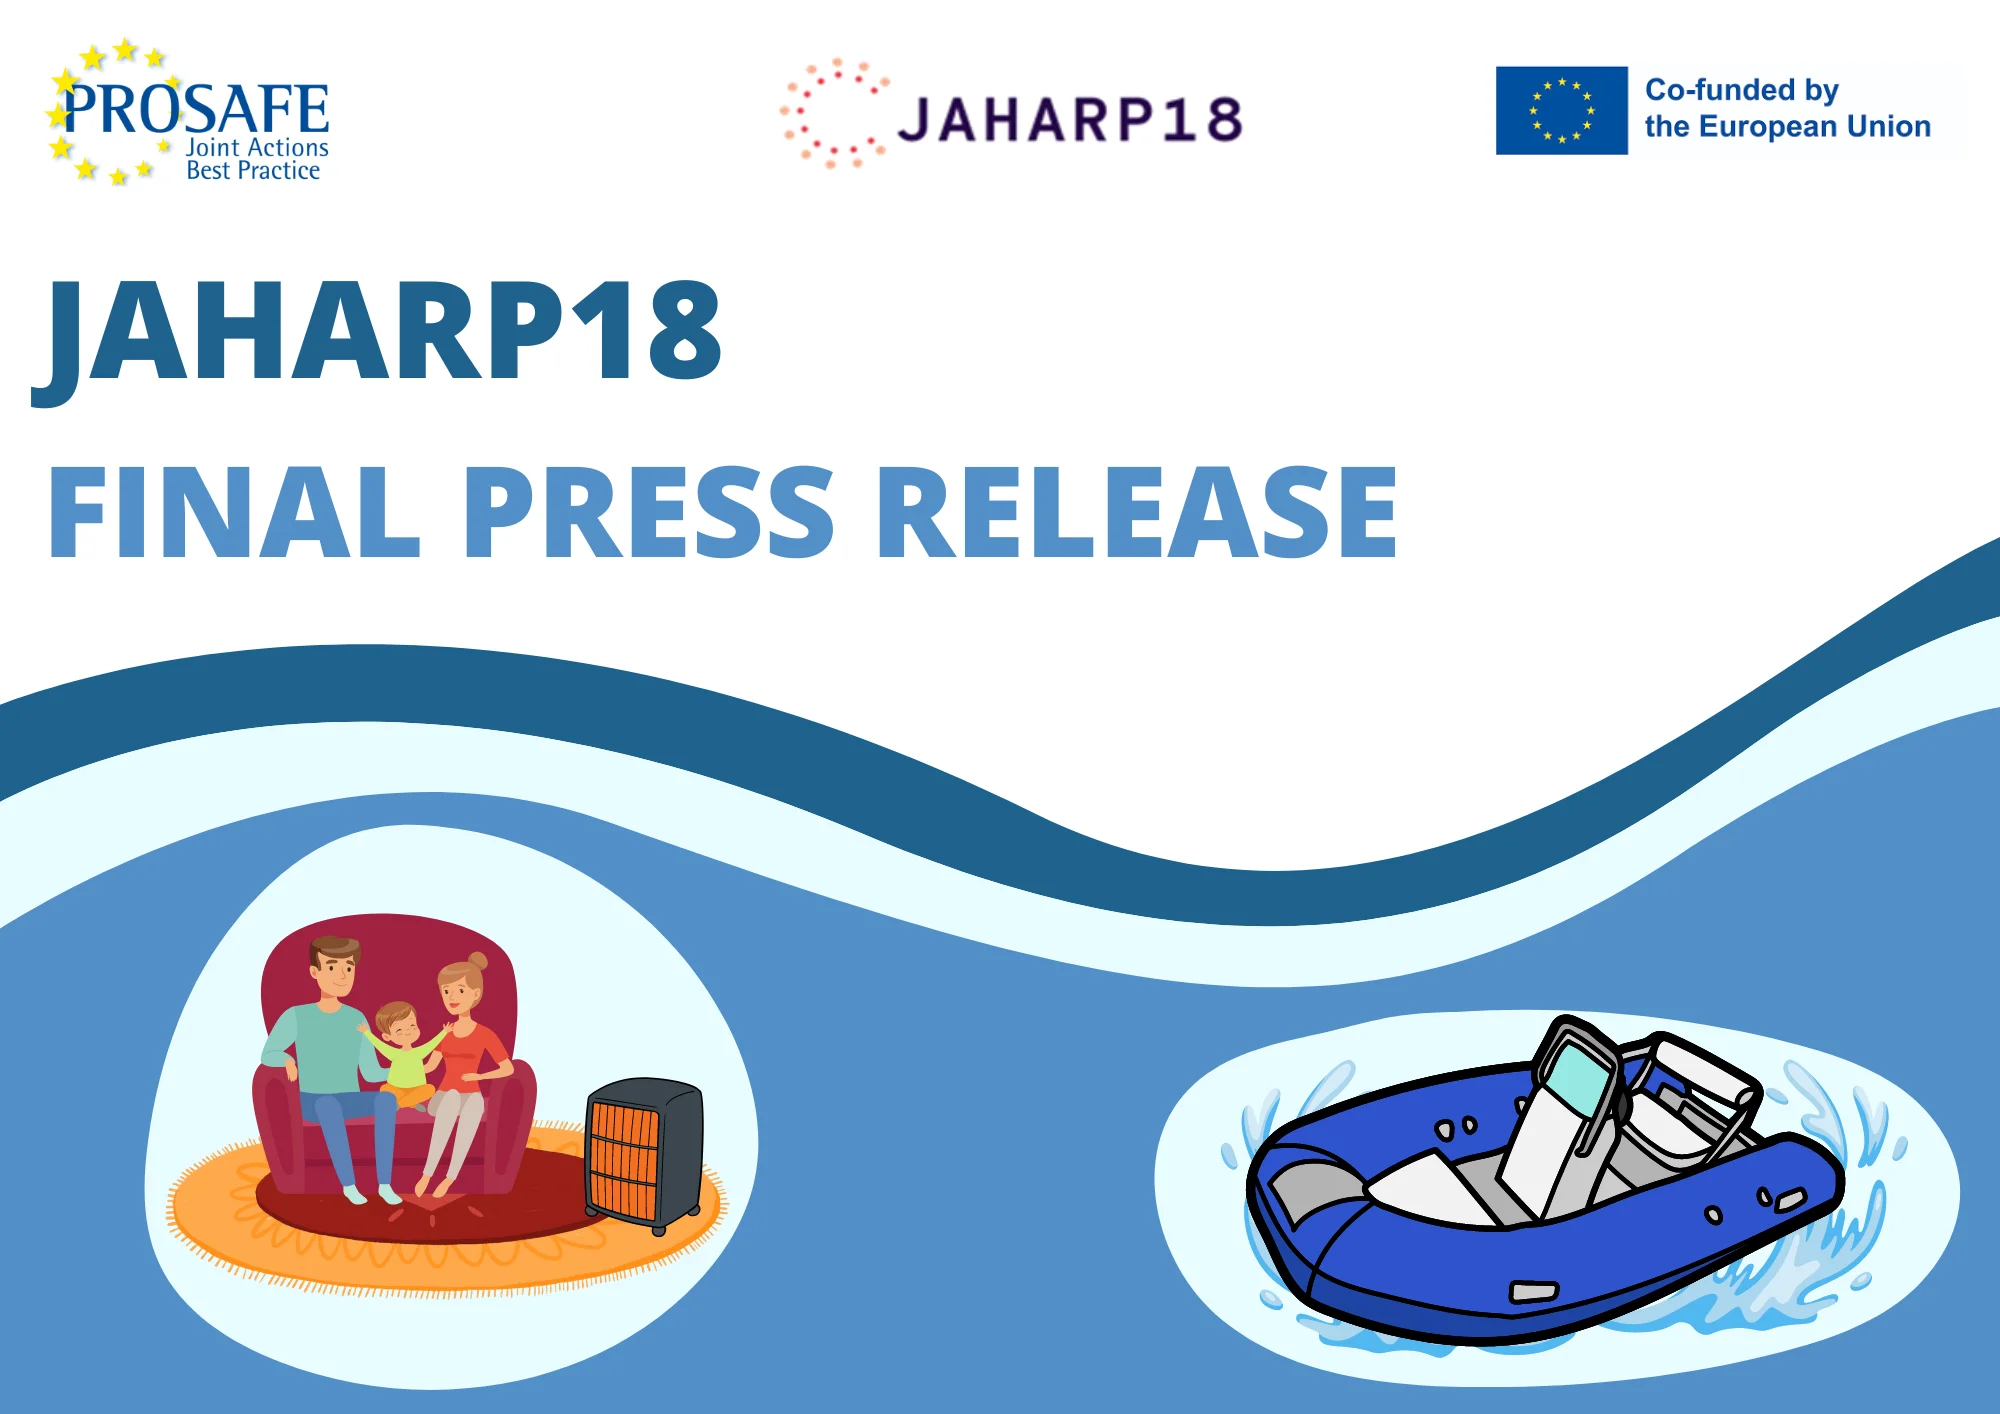 JAHARP18 FINAL PRESS RELEASE